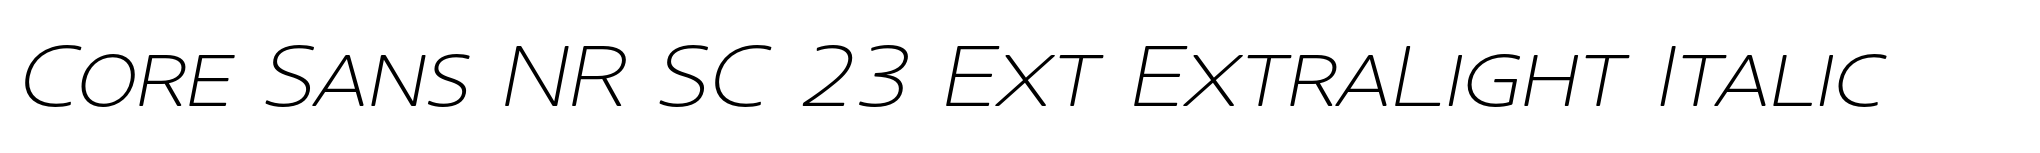 Core Sans NR SC 23 Ext ExtraLight Italic image